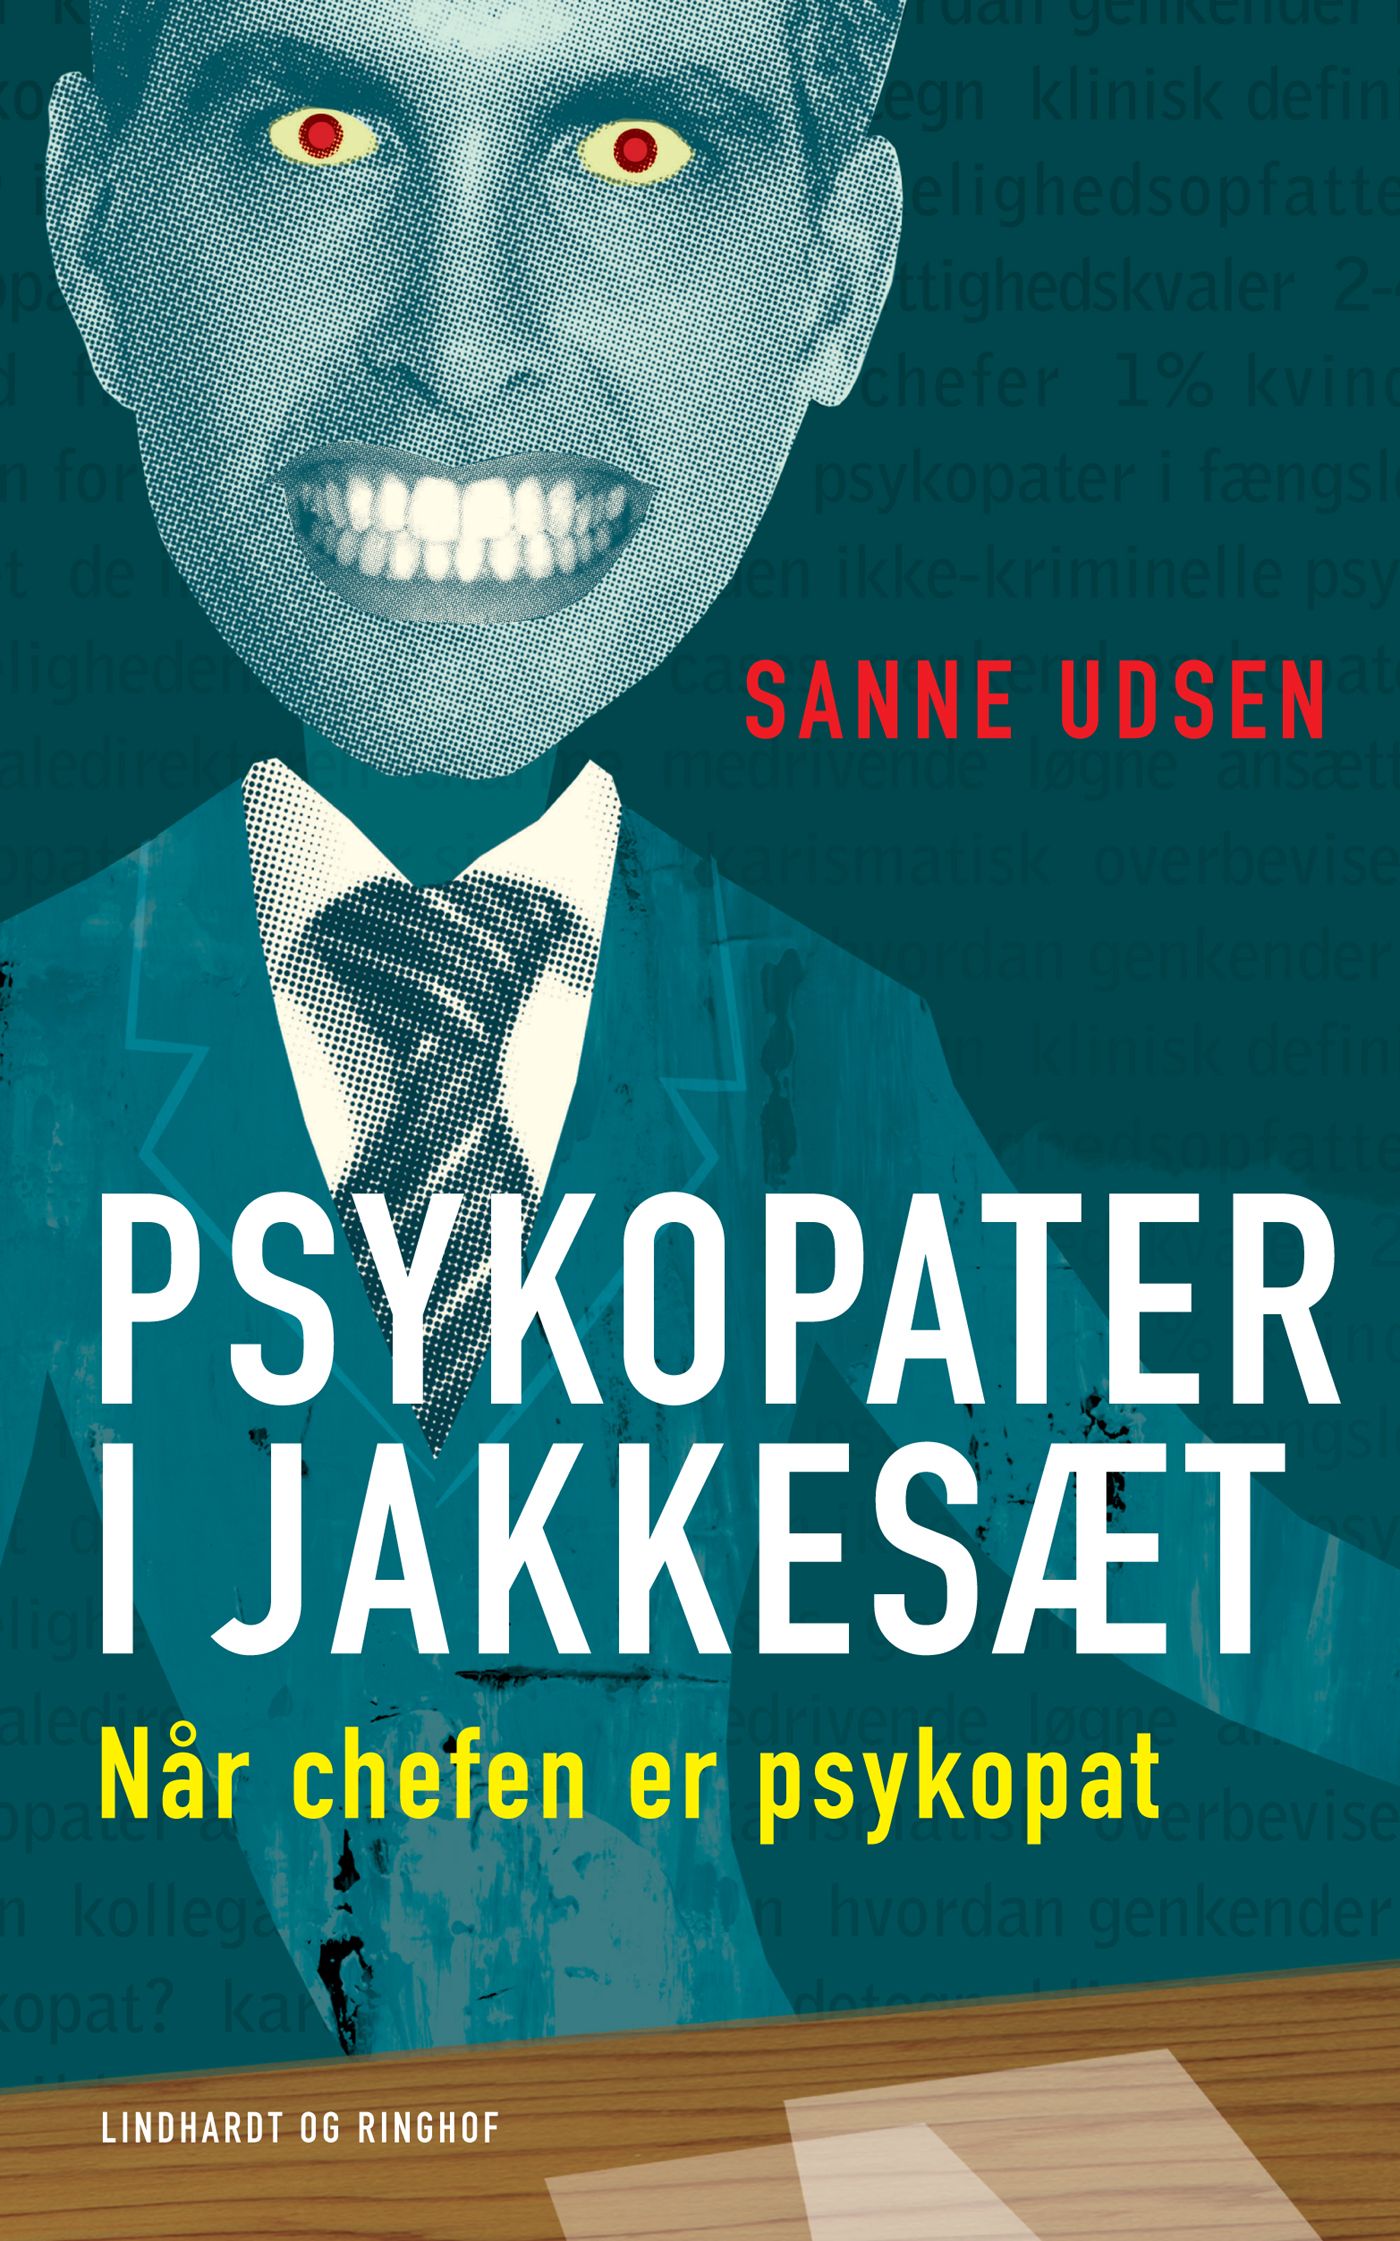 Psykopater i jakkesæt, eBook by Sanne Udsen